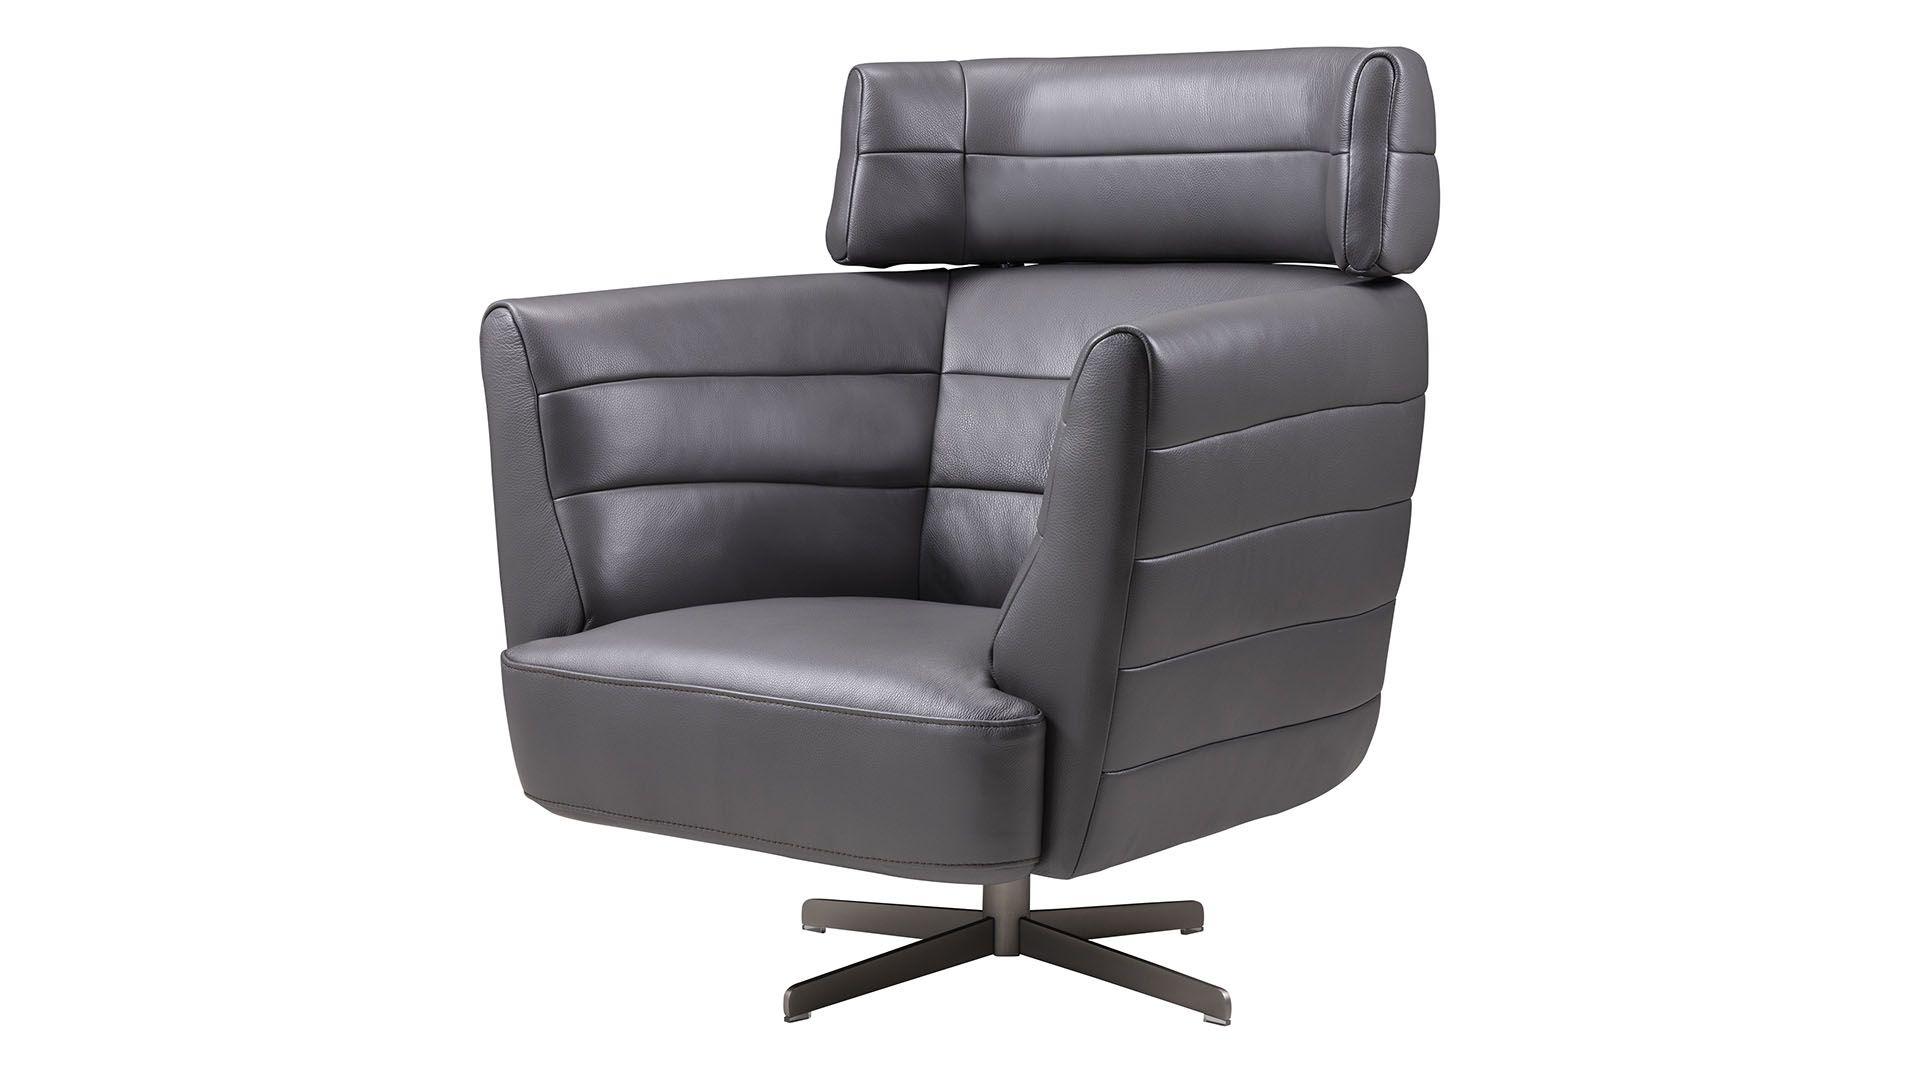 Contemporary, Modern Swivel Chair EK-CH08A-GR EK-CH08A-GR in Dark Gray Top grain leather